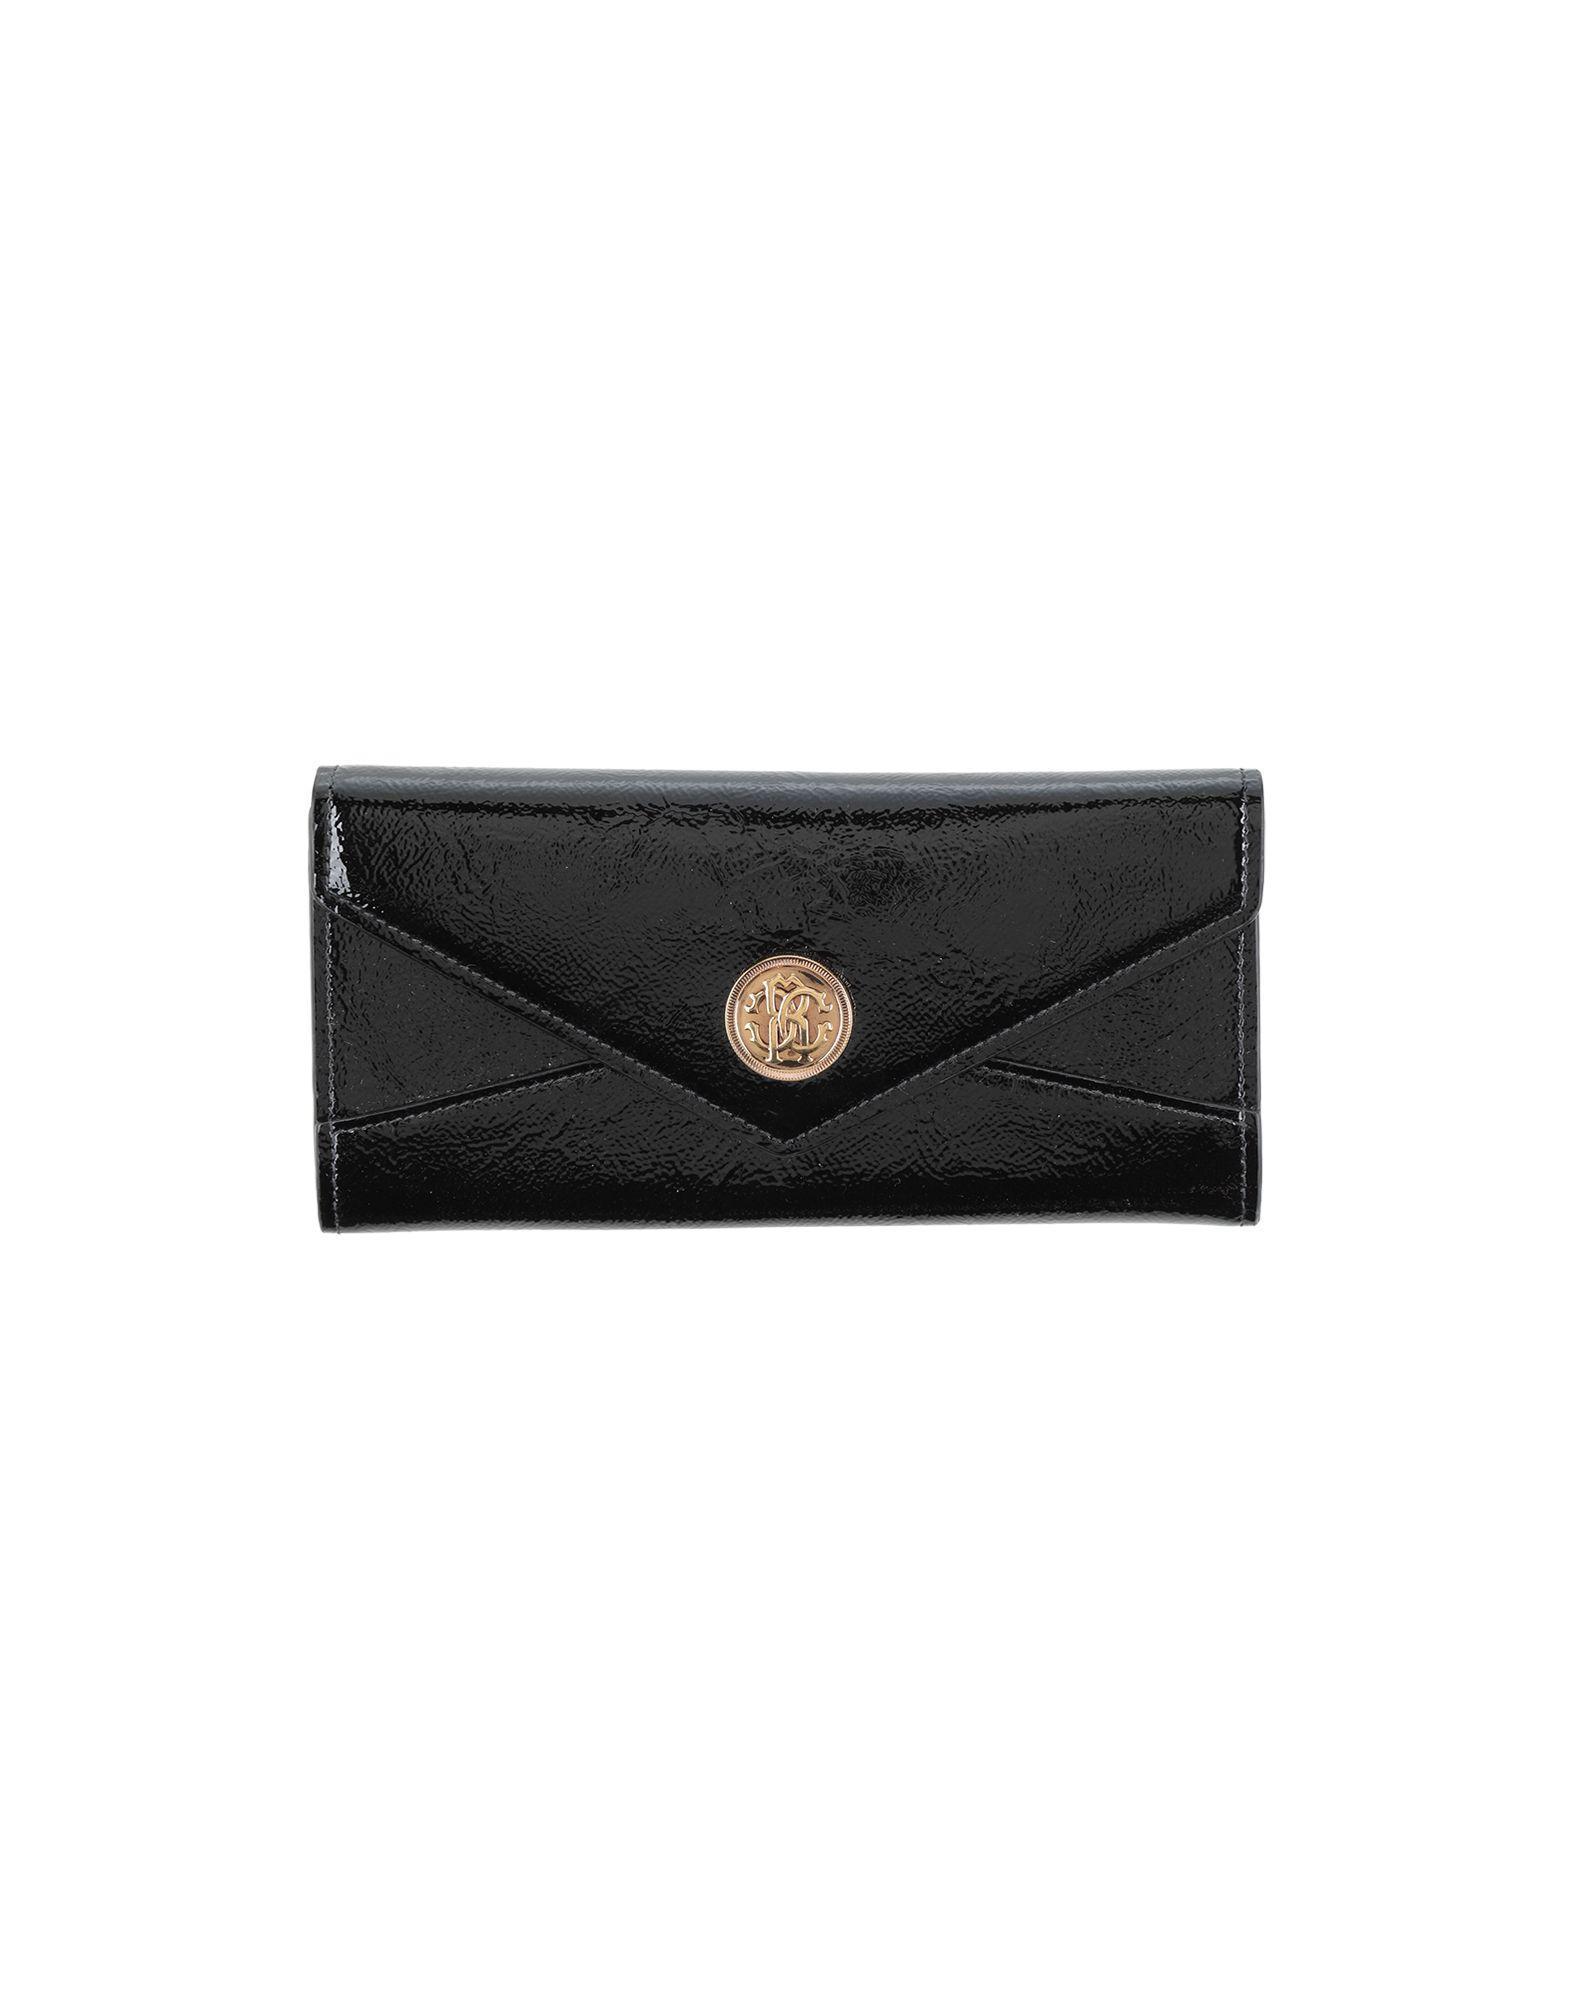 Roberto Cavalli Leather Wallet in Black - Lyst